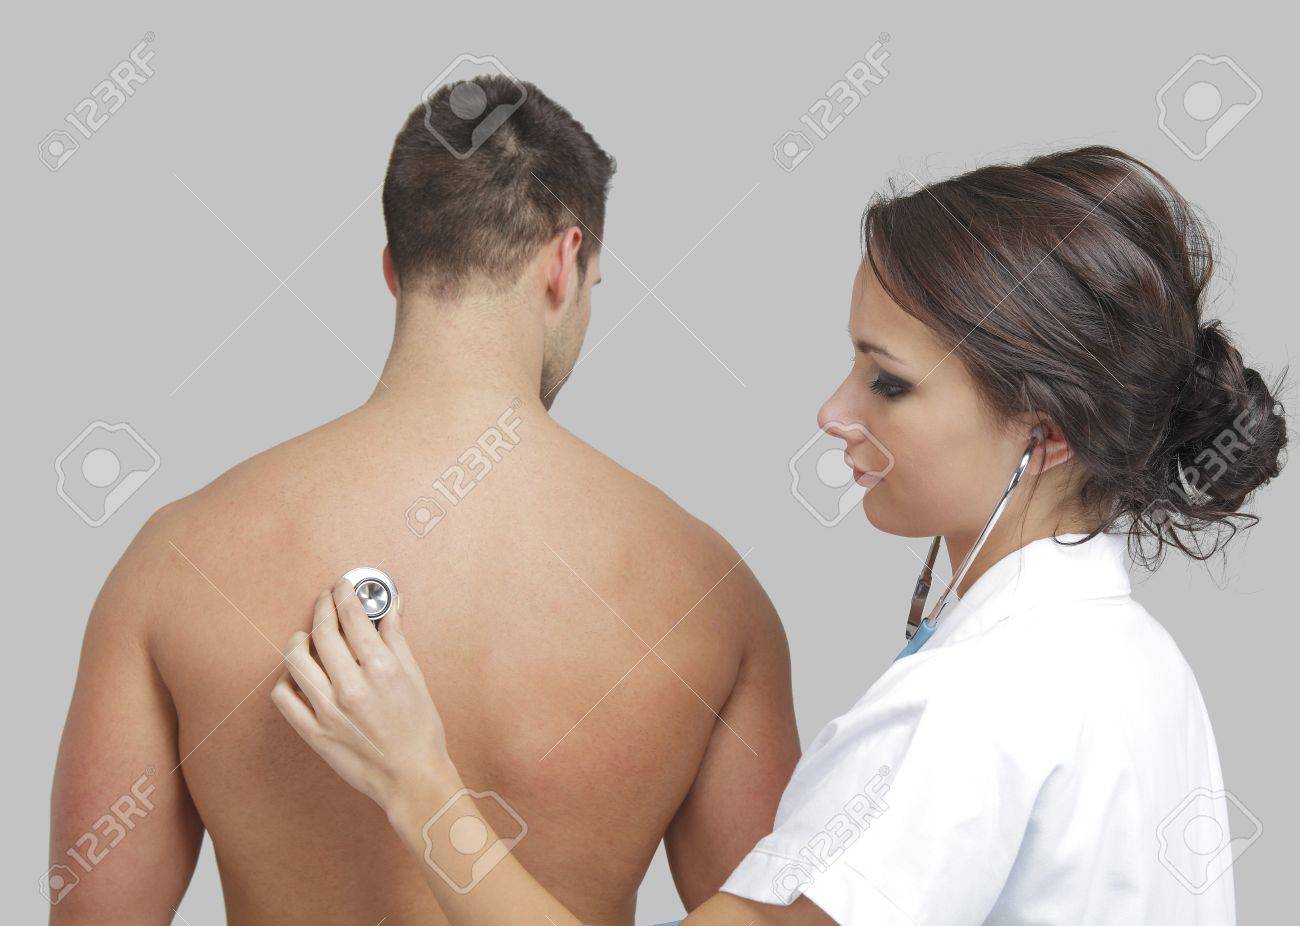 andrea castaneda add photo female doctor examining man